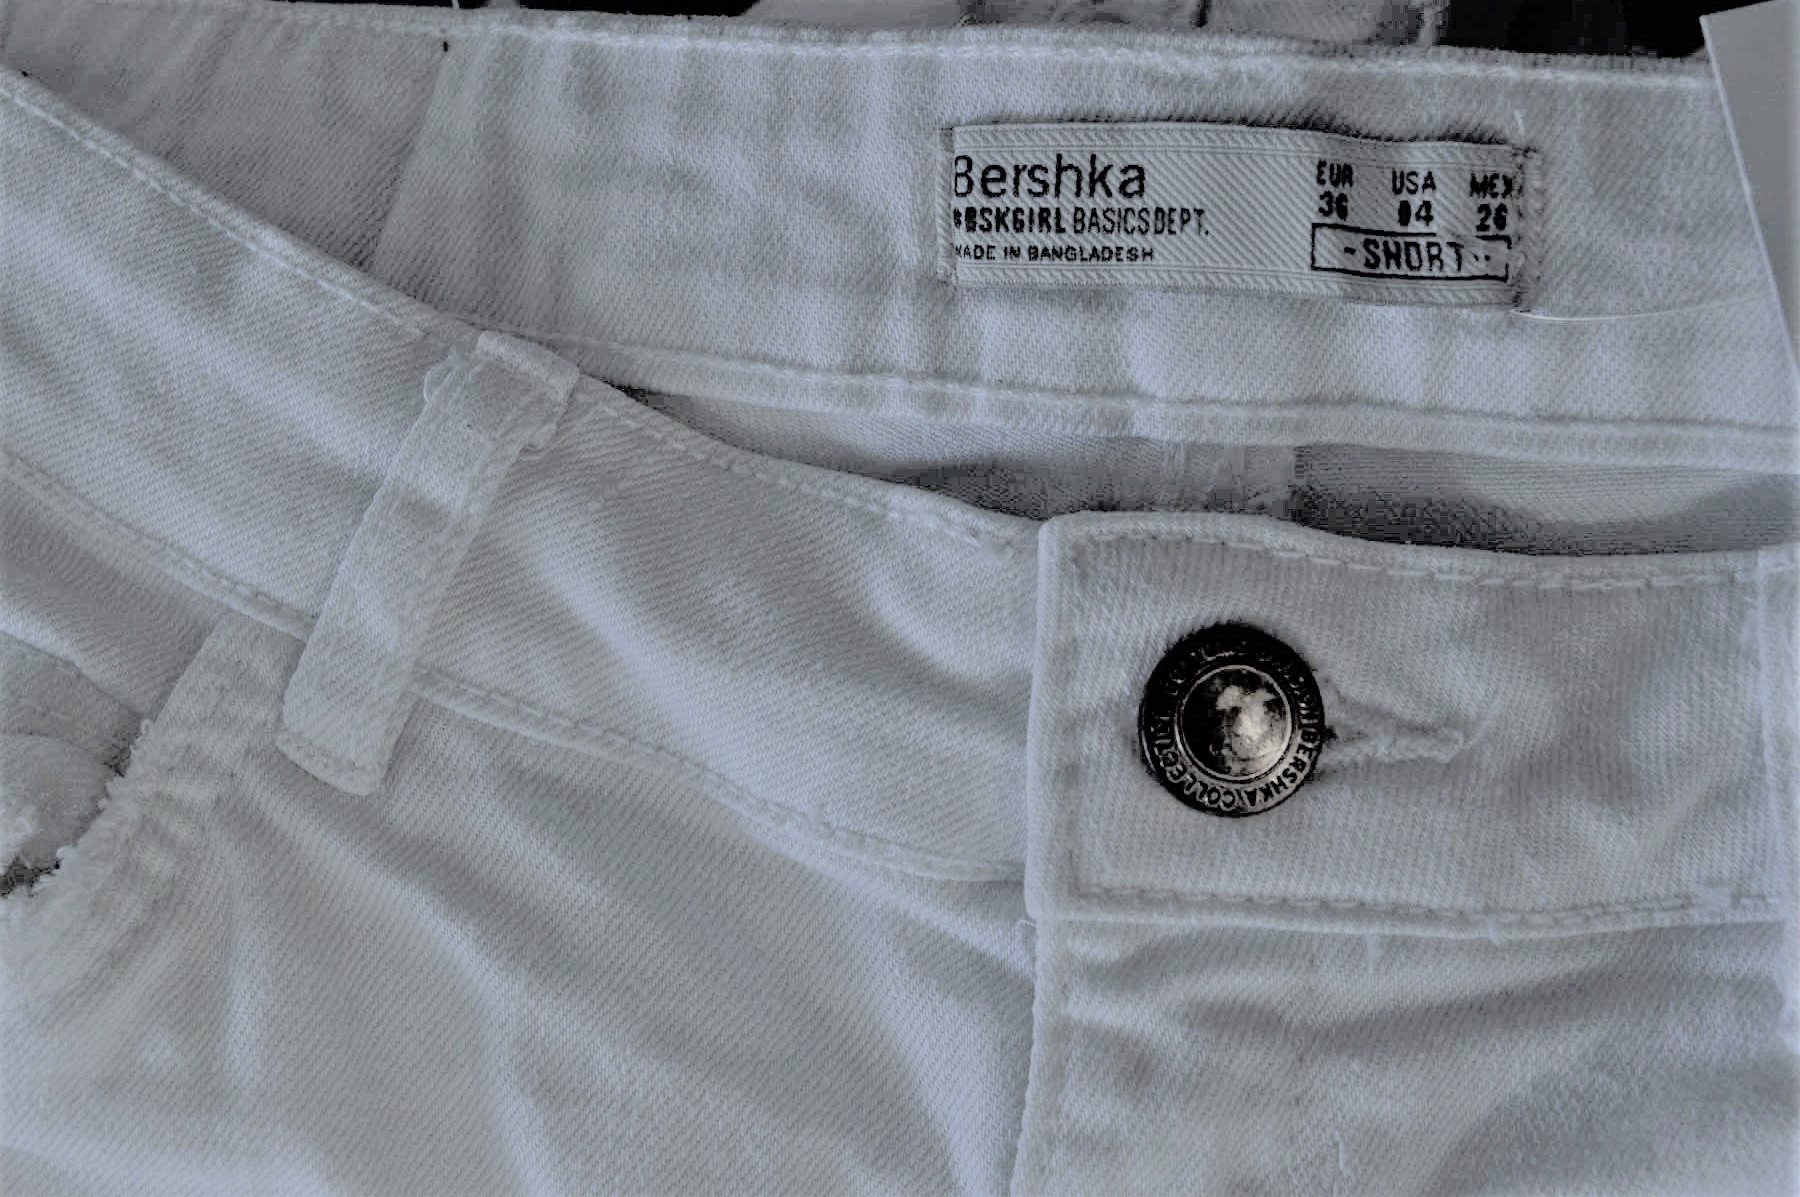 Pantaloni scurți de damă - Bershka-BSKGIRL - 2